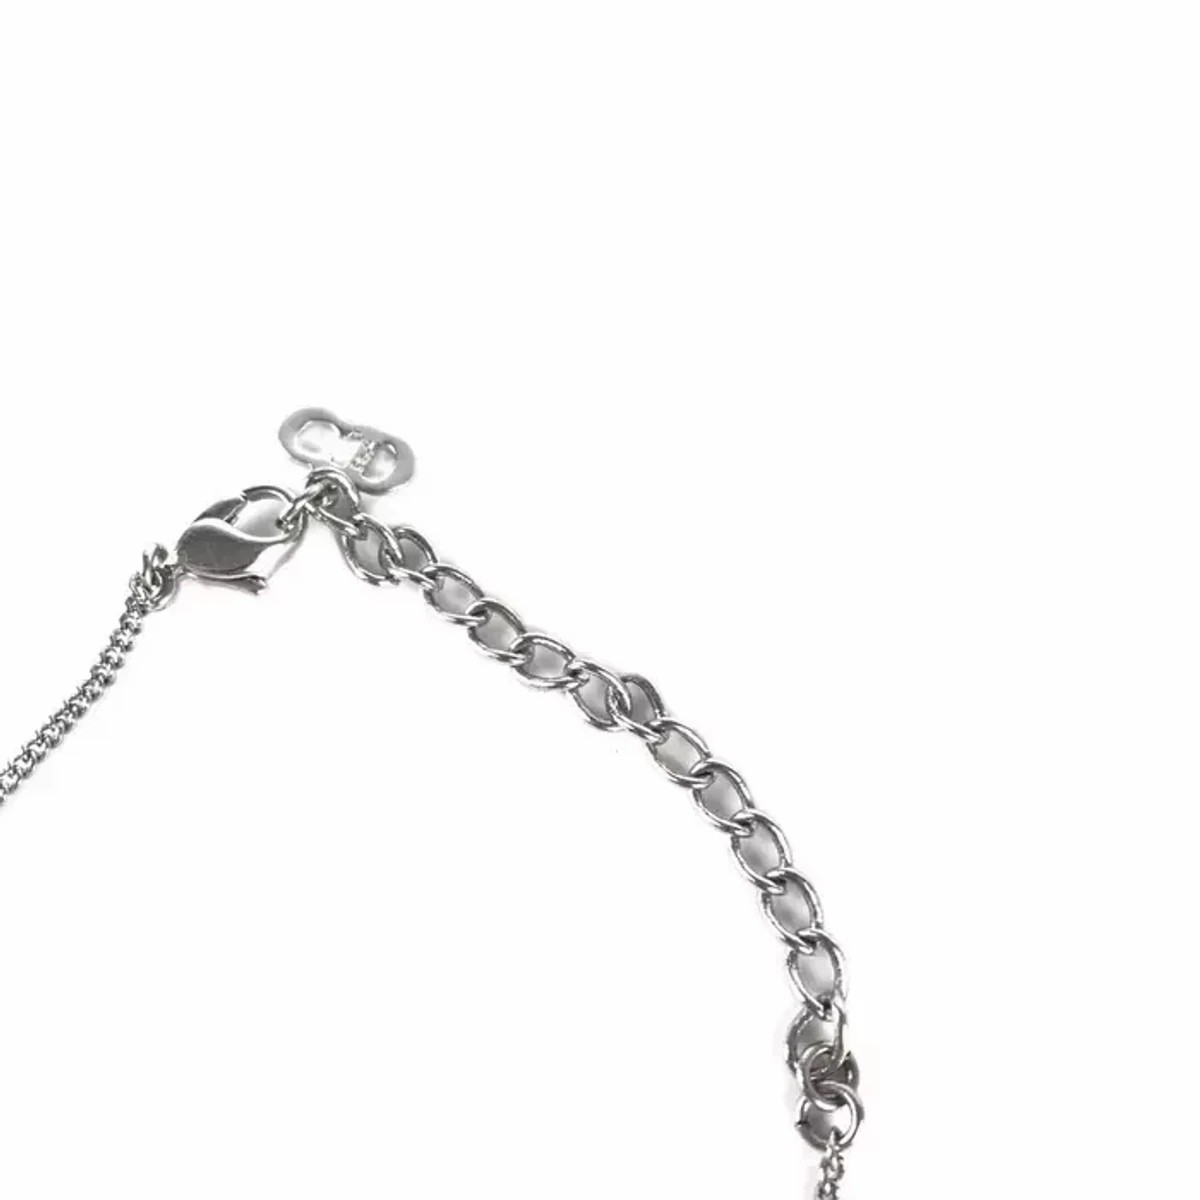 Silver Spellout Bracelet - 2